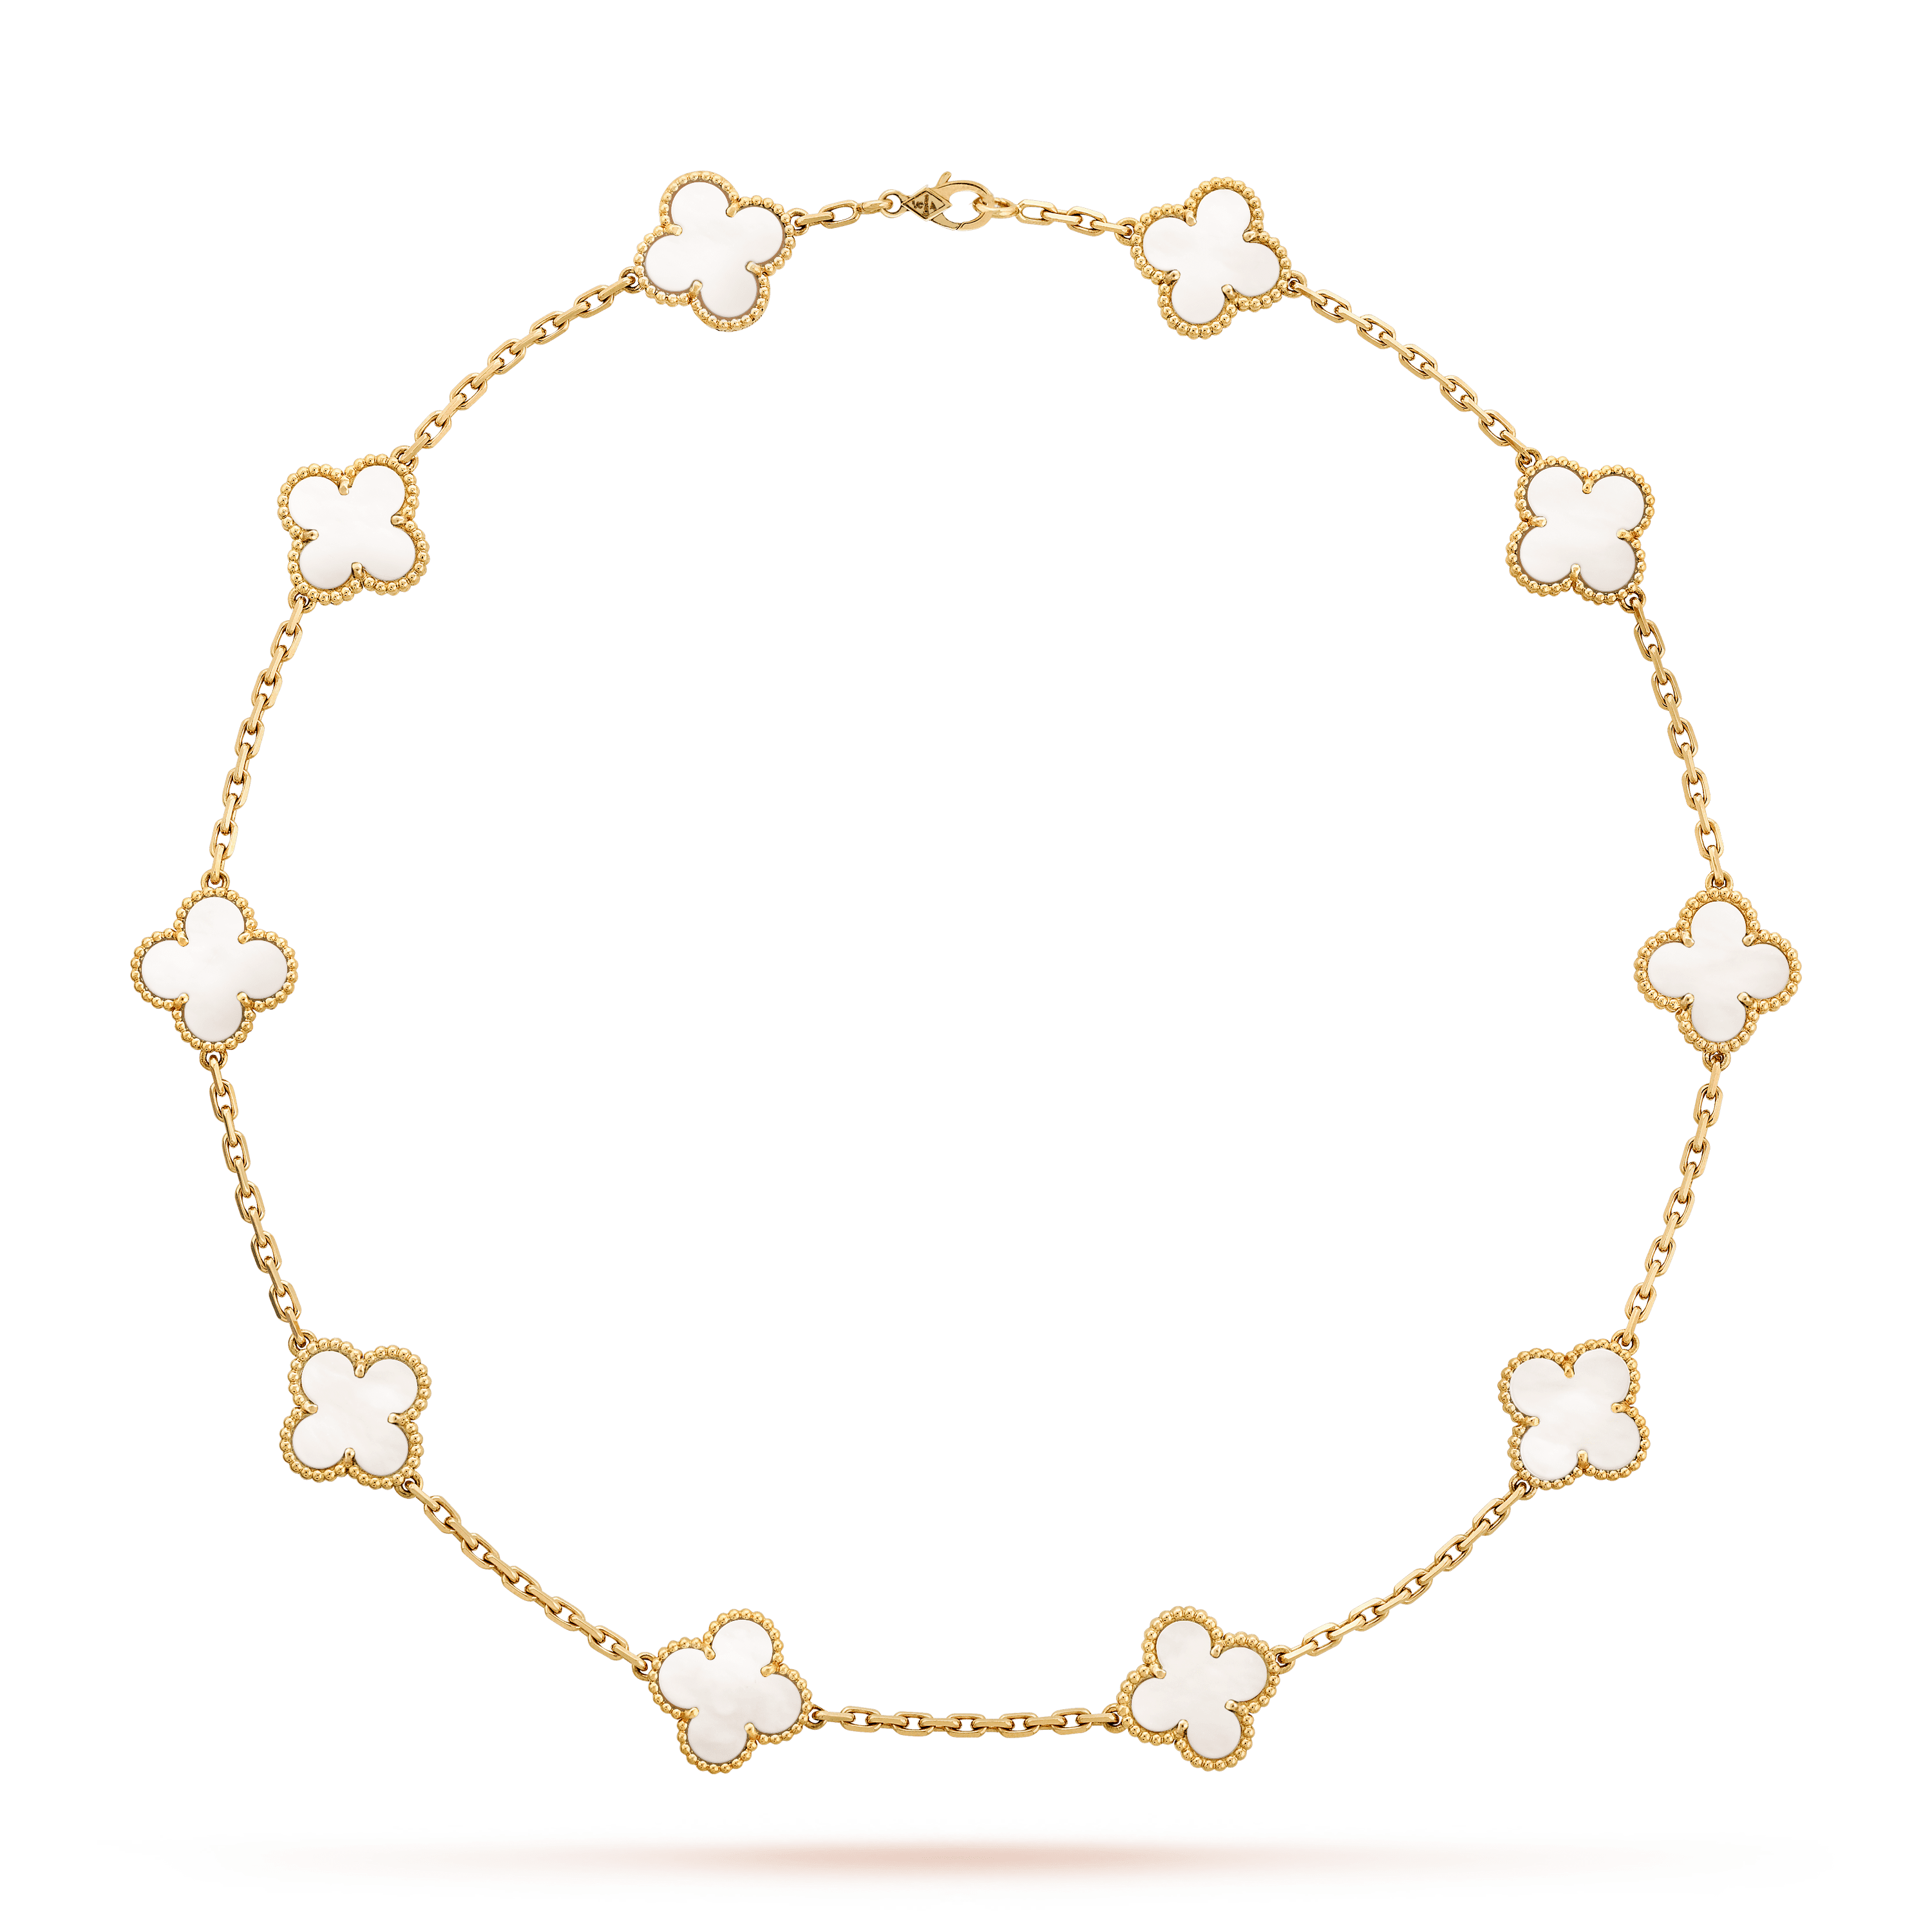 Vintage Alhambra necklace, 10 motifs 18K yellow gold- Van Cleef & Arpels